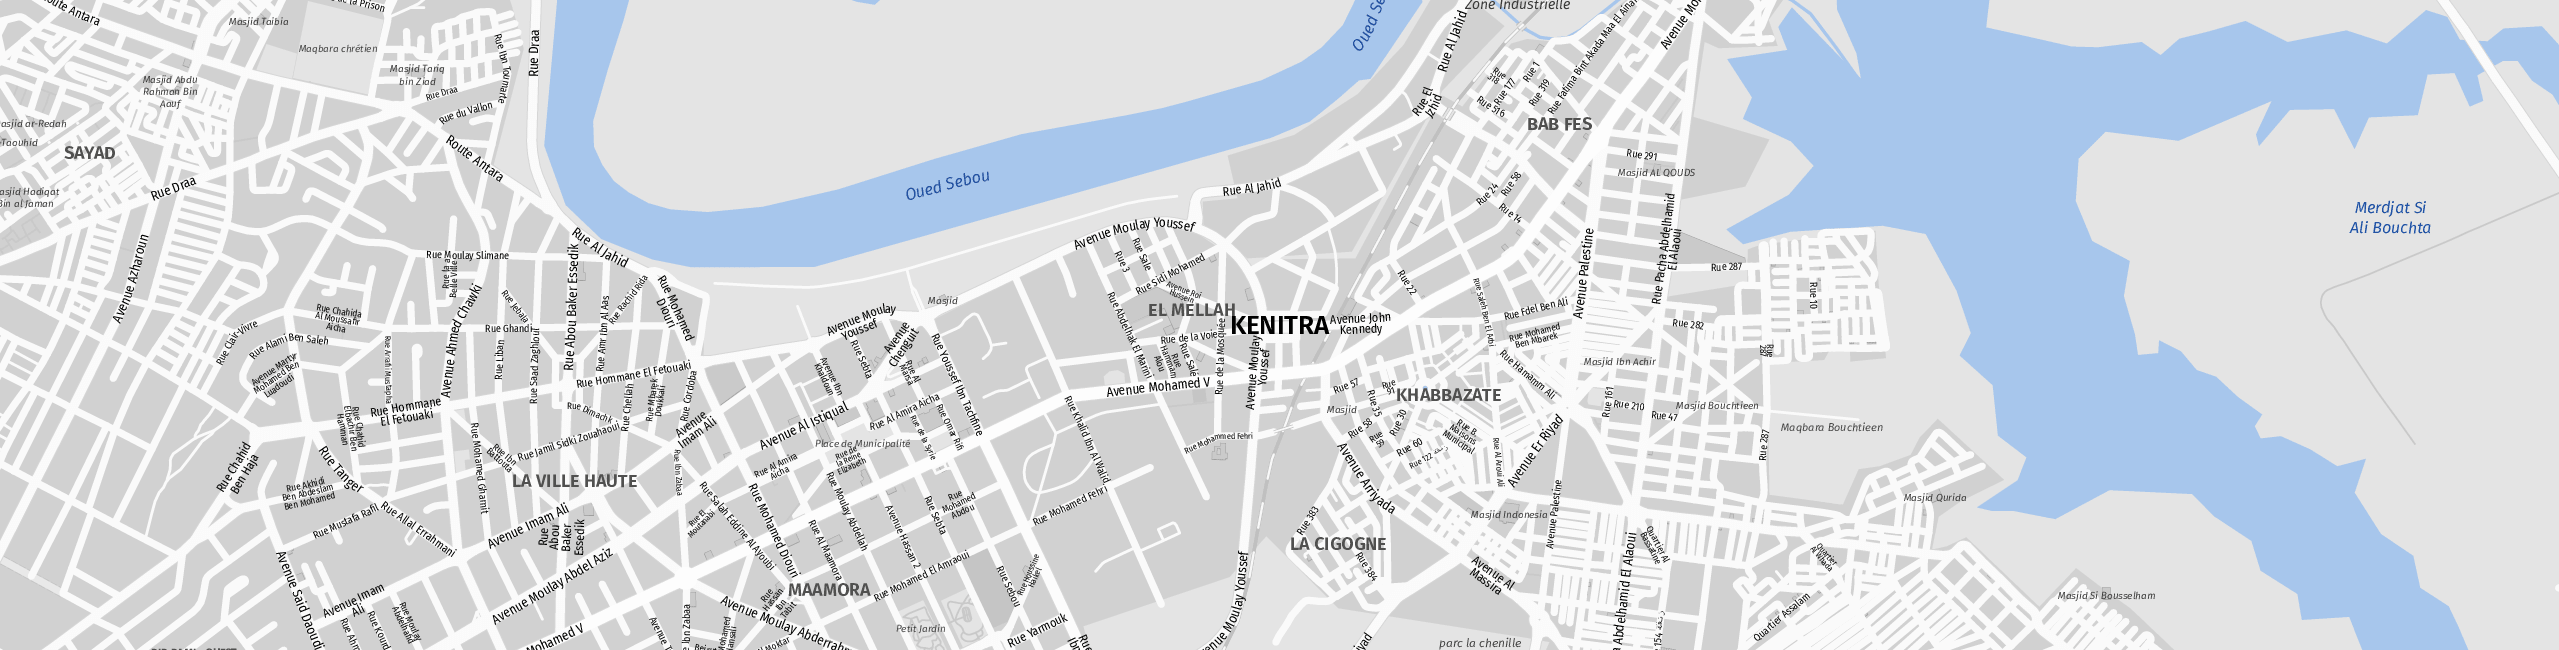 Stadtplan Kenitra zum Downloaden.